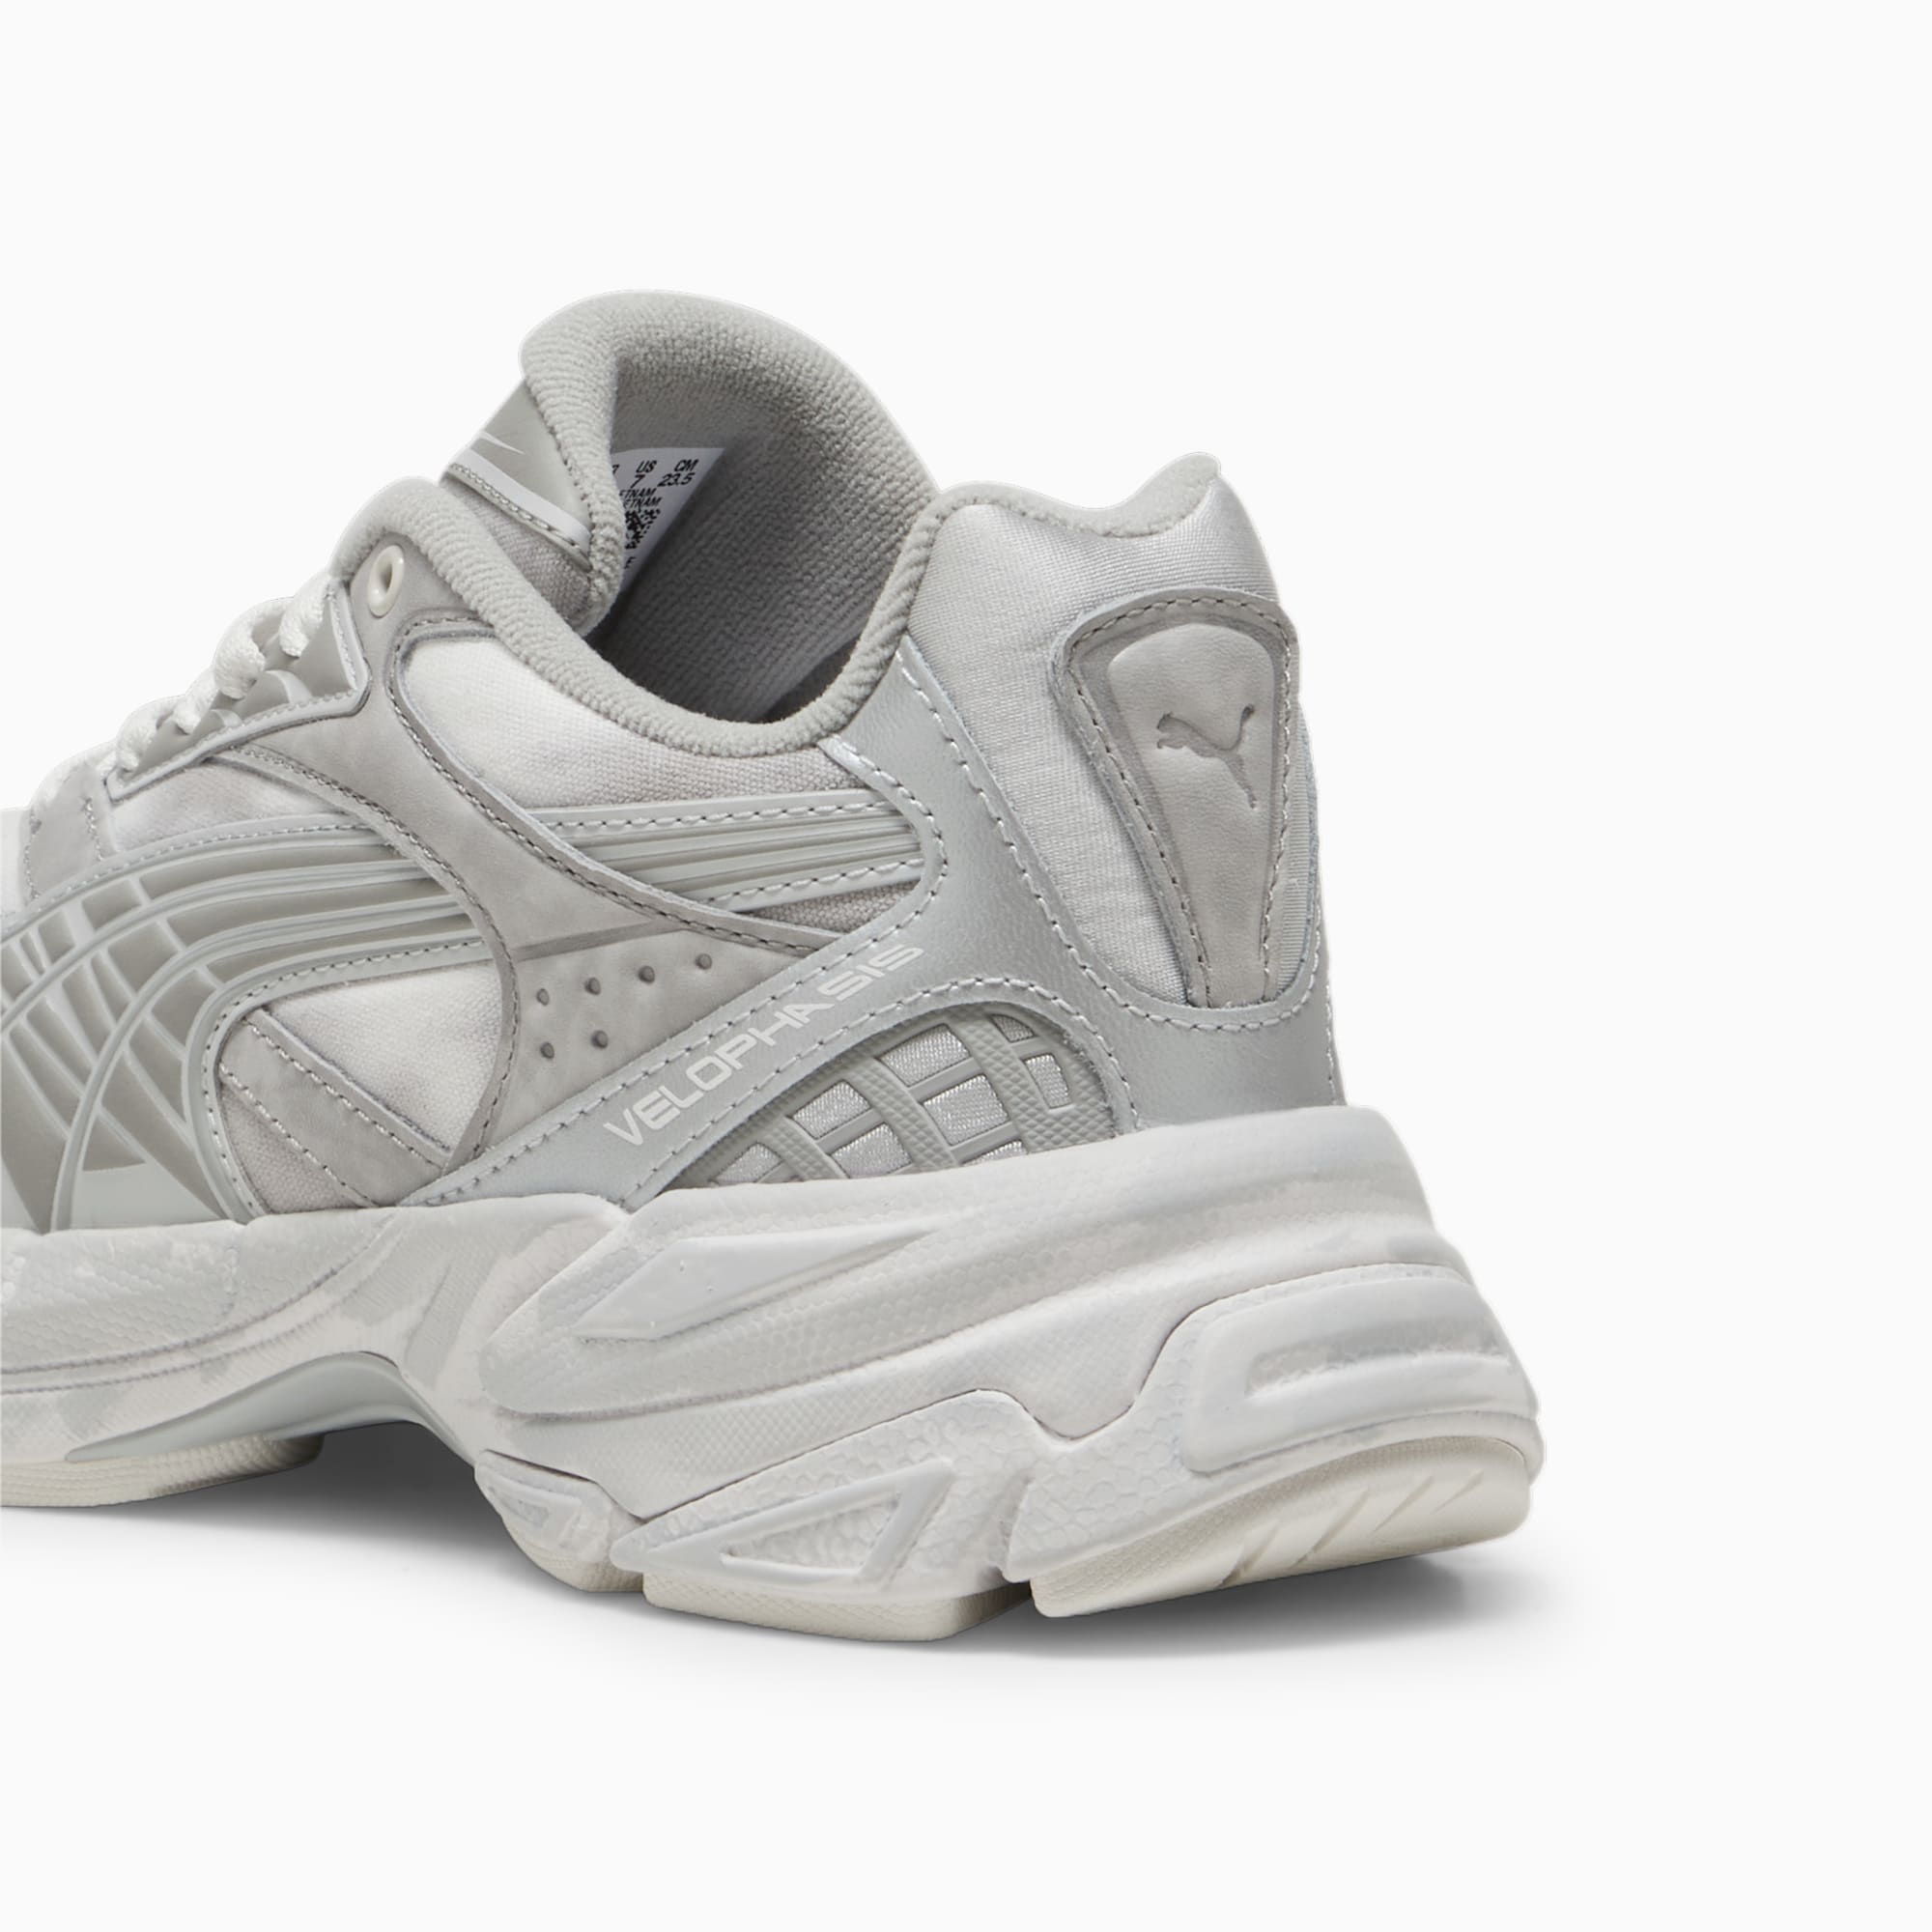 PUMA Velophasis 'retreat Yourself' Women's Sneakers, Cool Light Grey/Smokey Grey, Size 35,5, Shoes